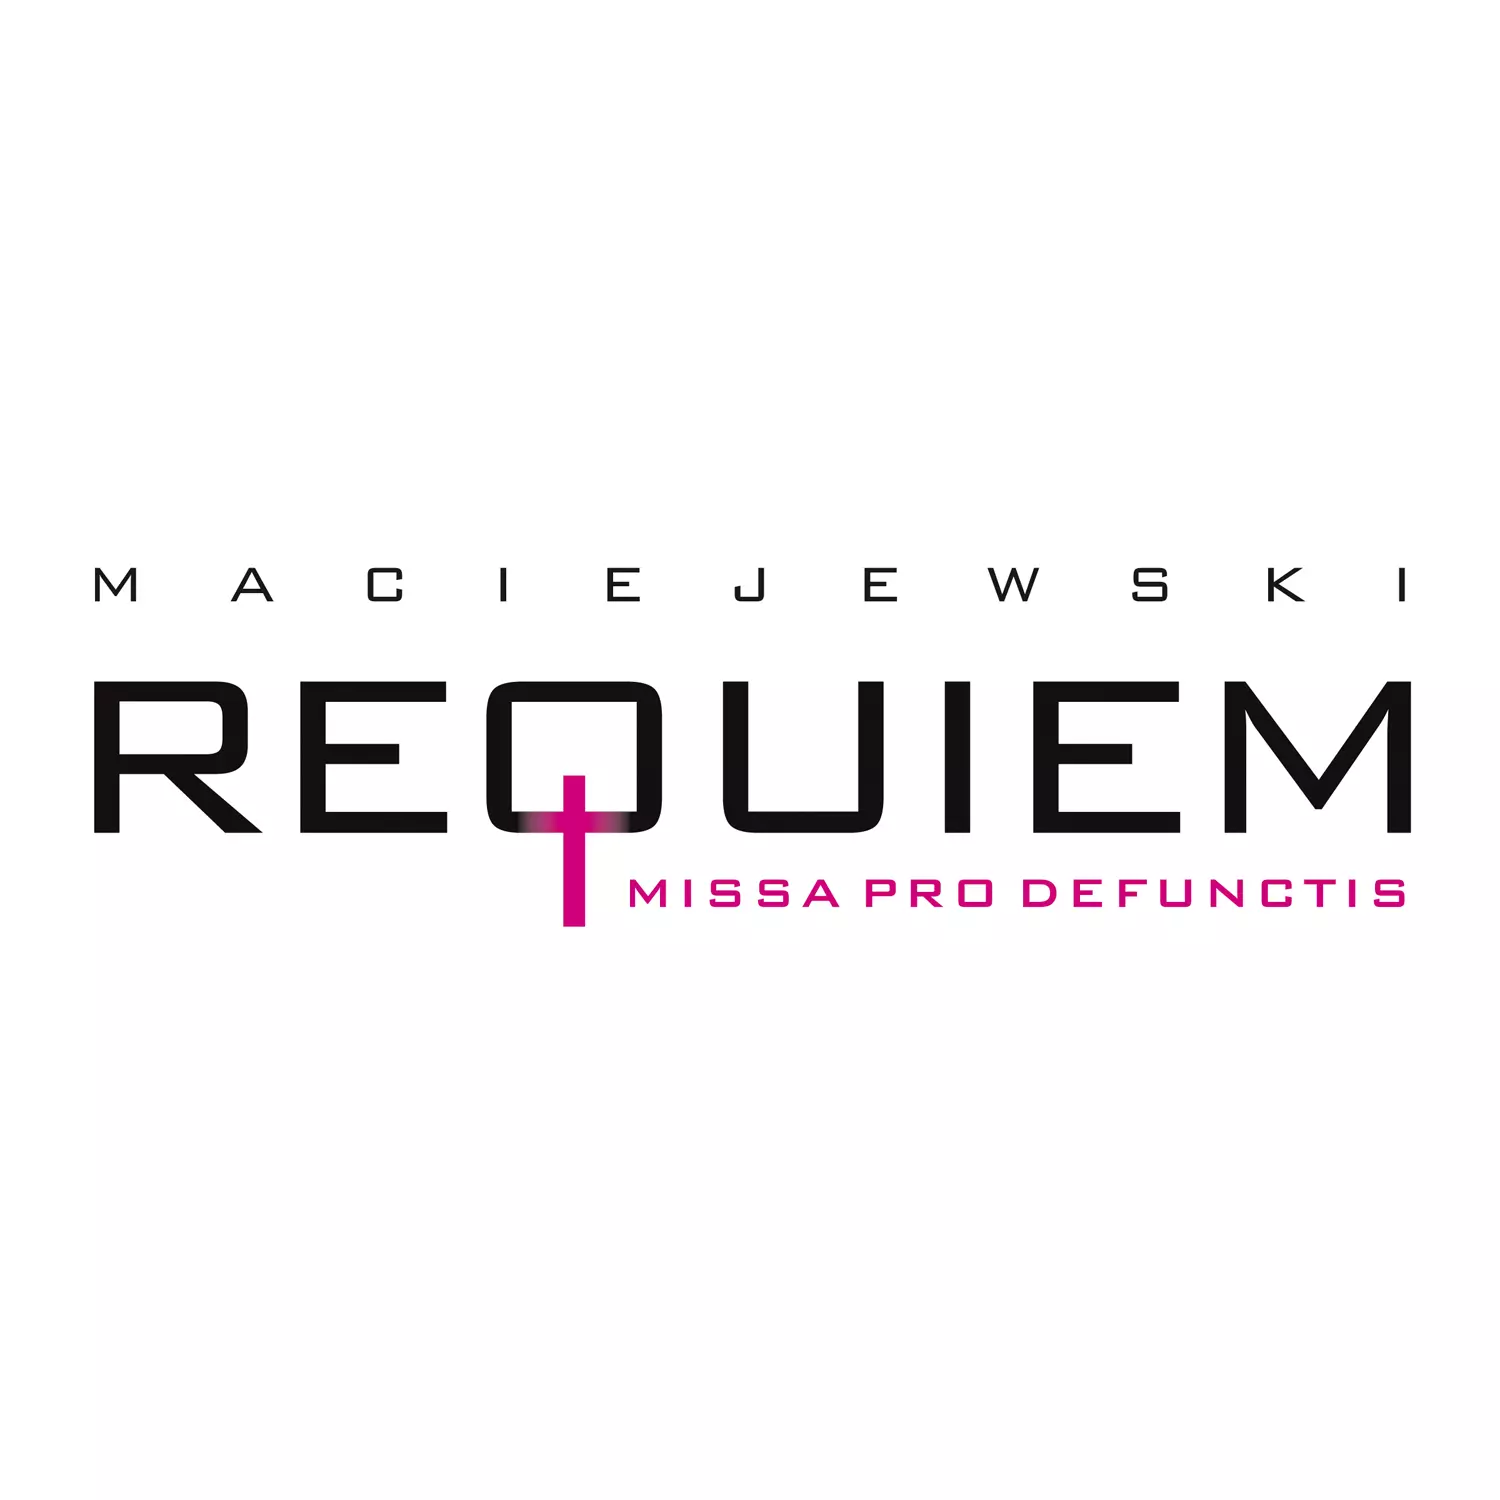 Requiem. Missa Pro Defunctis